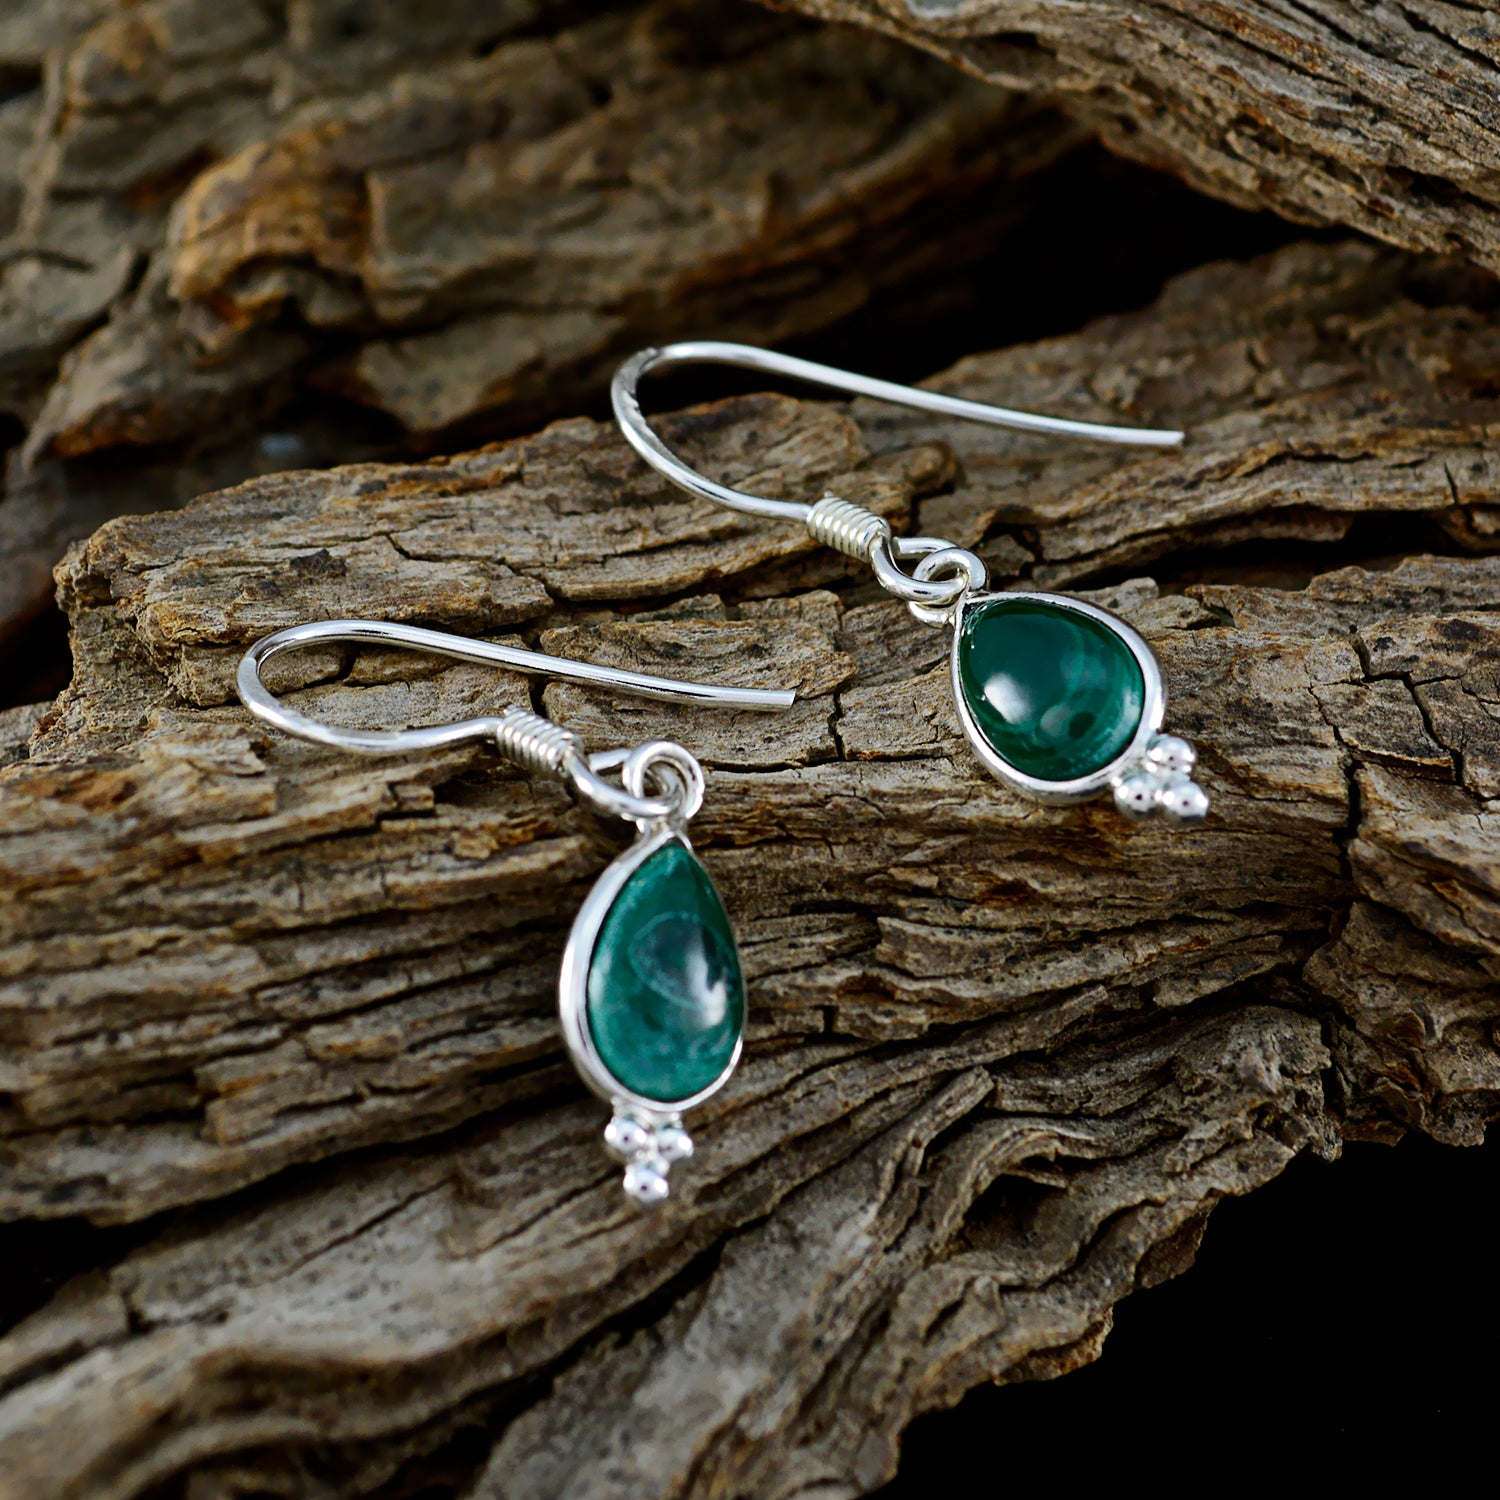 Riyo Good Gemstones pear Cabochon Green Malachatie Silver Earrings gift for handmade